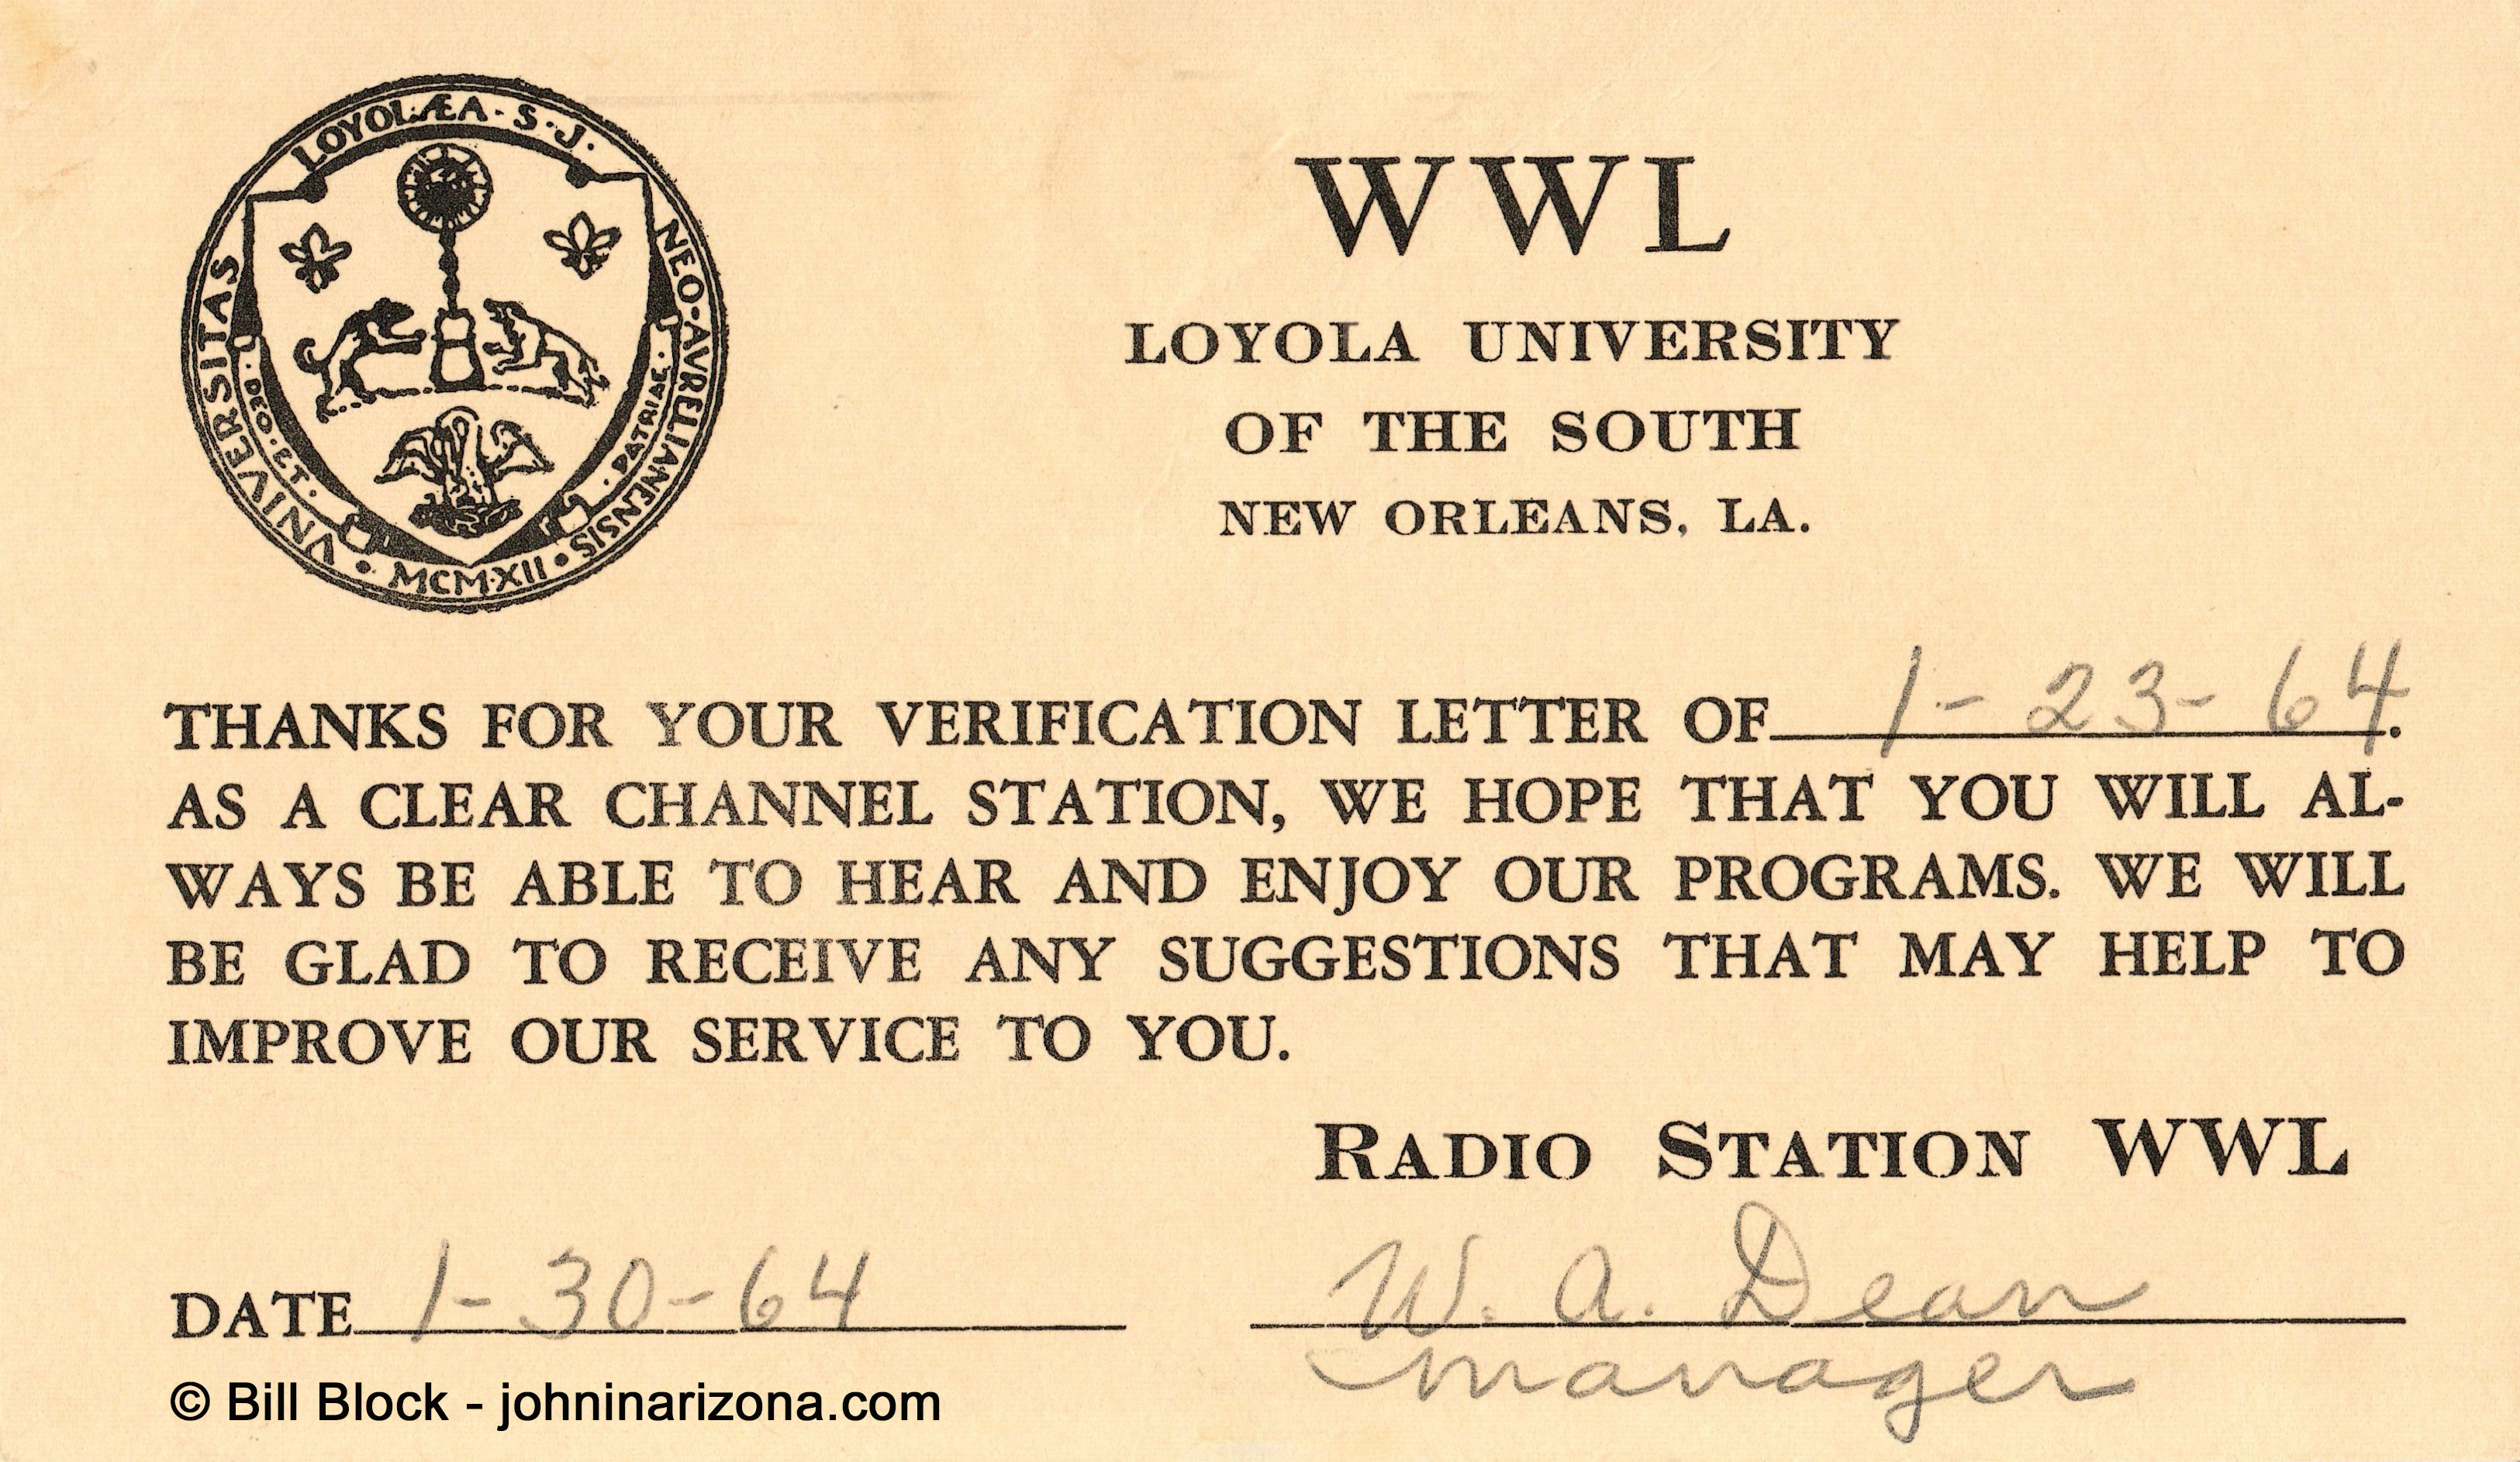 WWL Radio 870 New Orleans, Louisiana